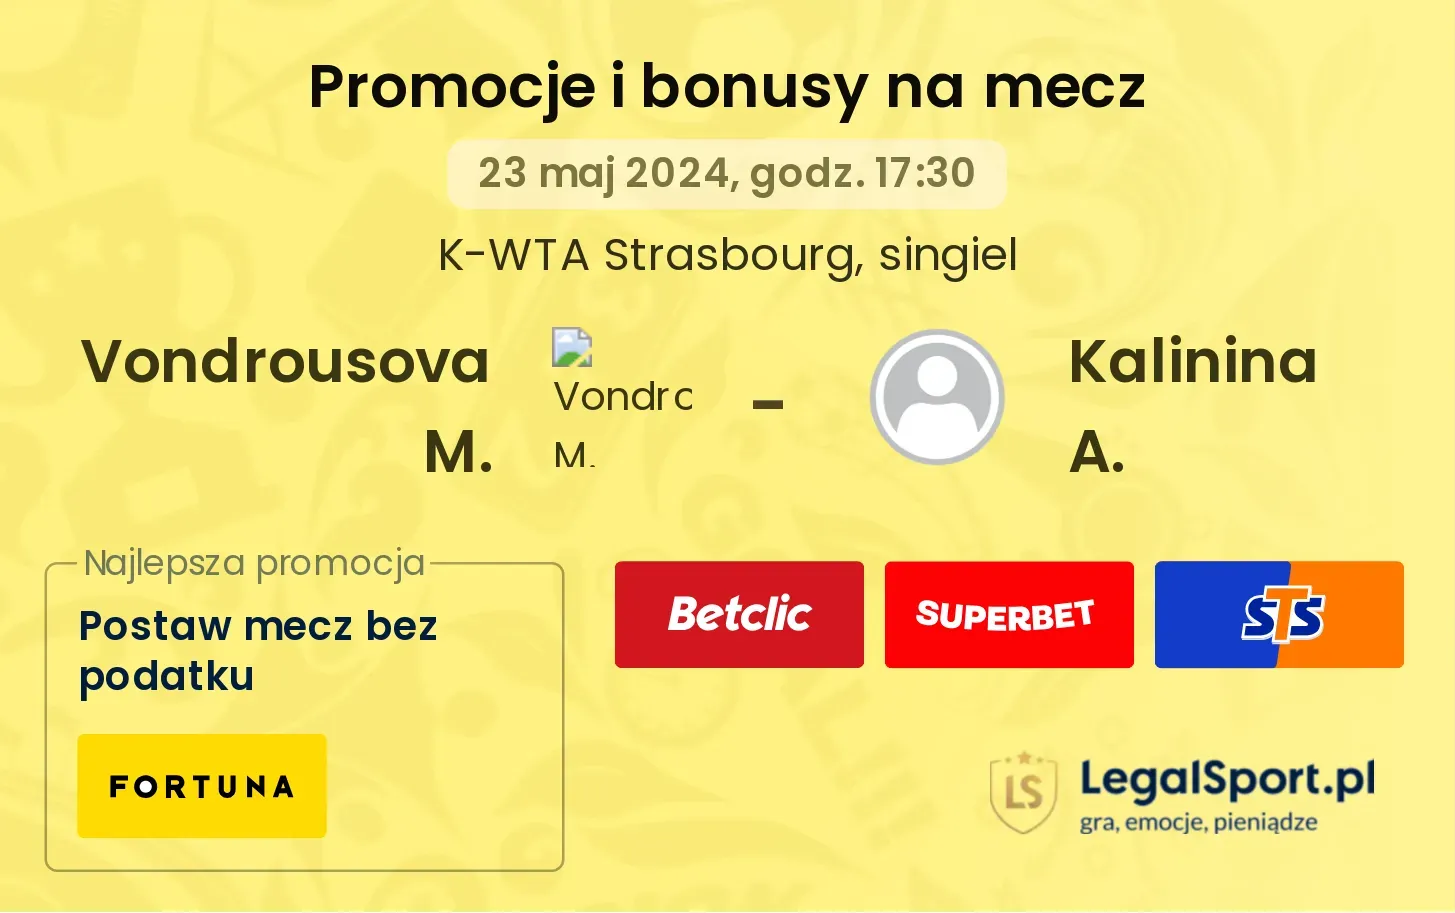 Vondrousova M. - Kalinina A. promocje bonusy na mecz